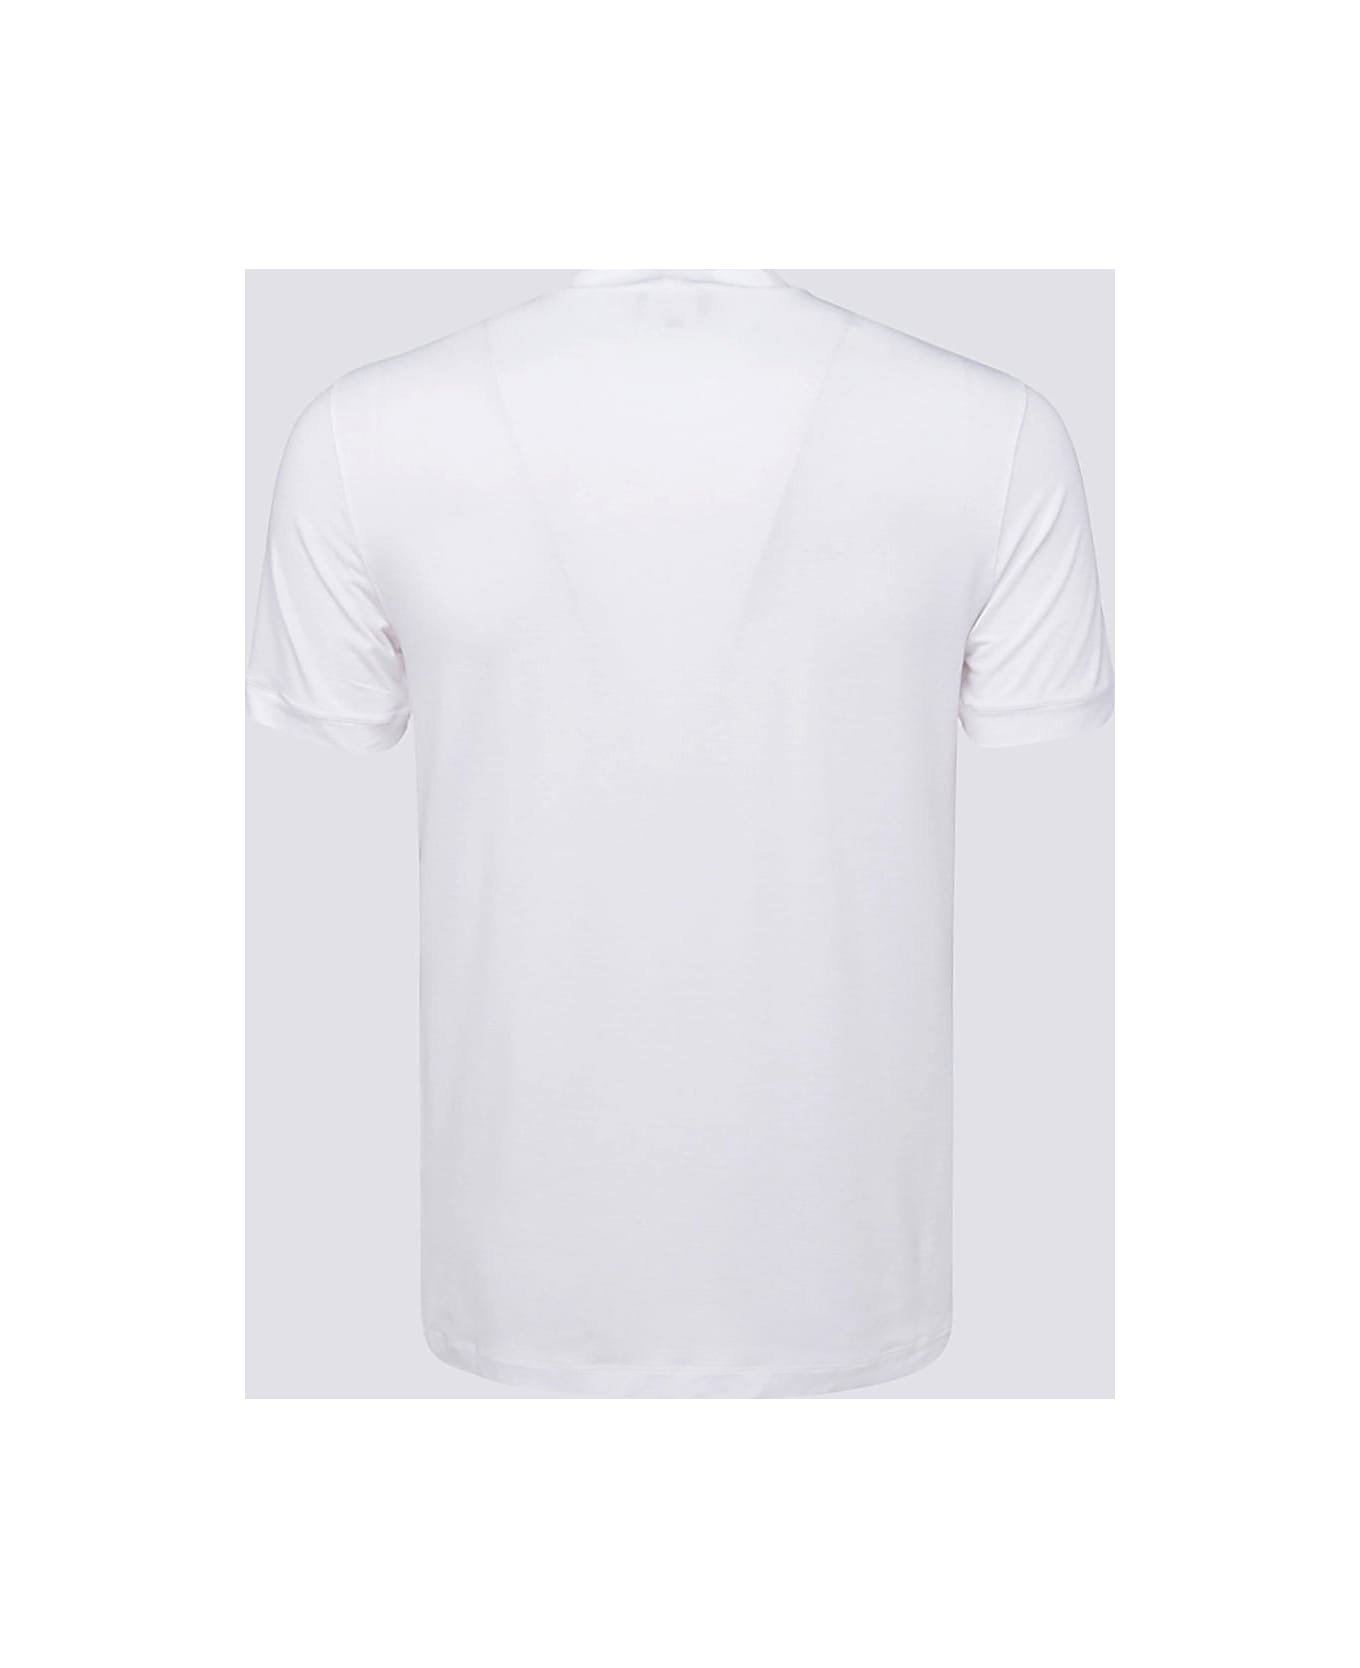 Giorgio Armani White Cotton T-shirt - WHITE